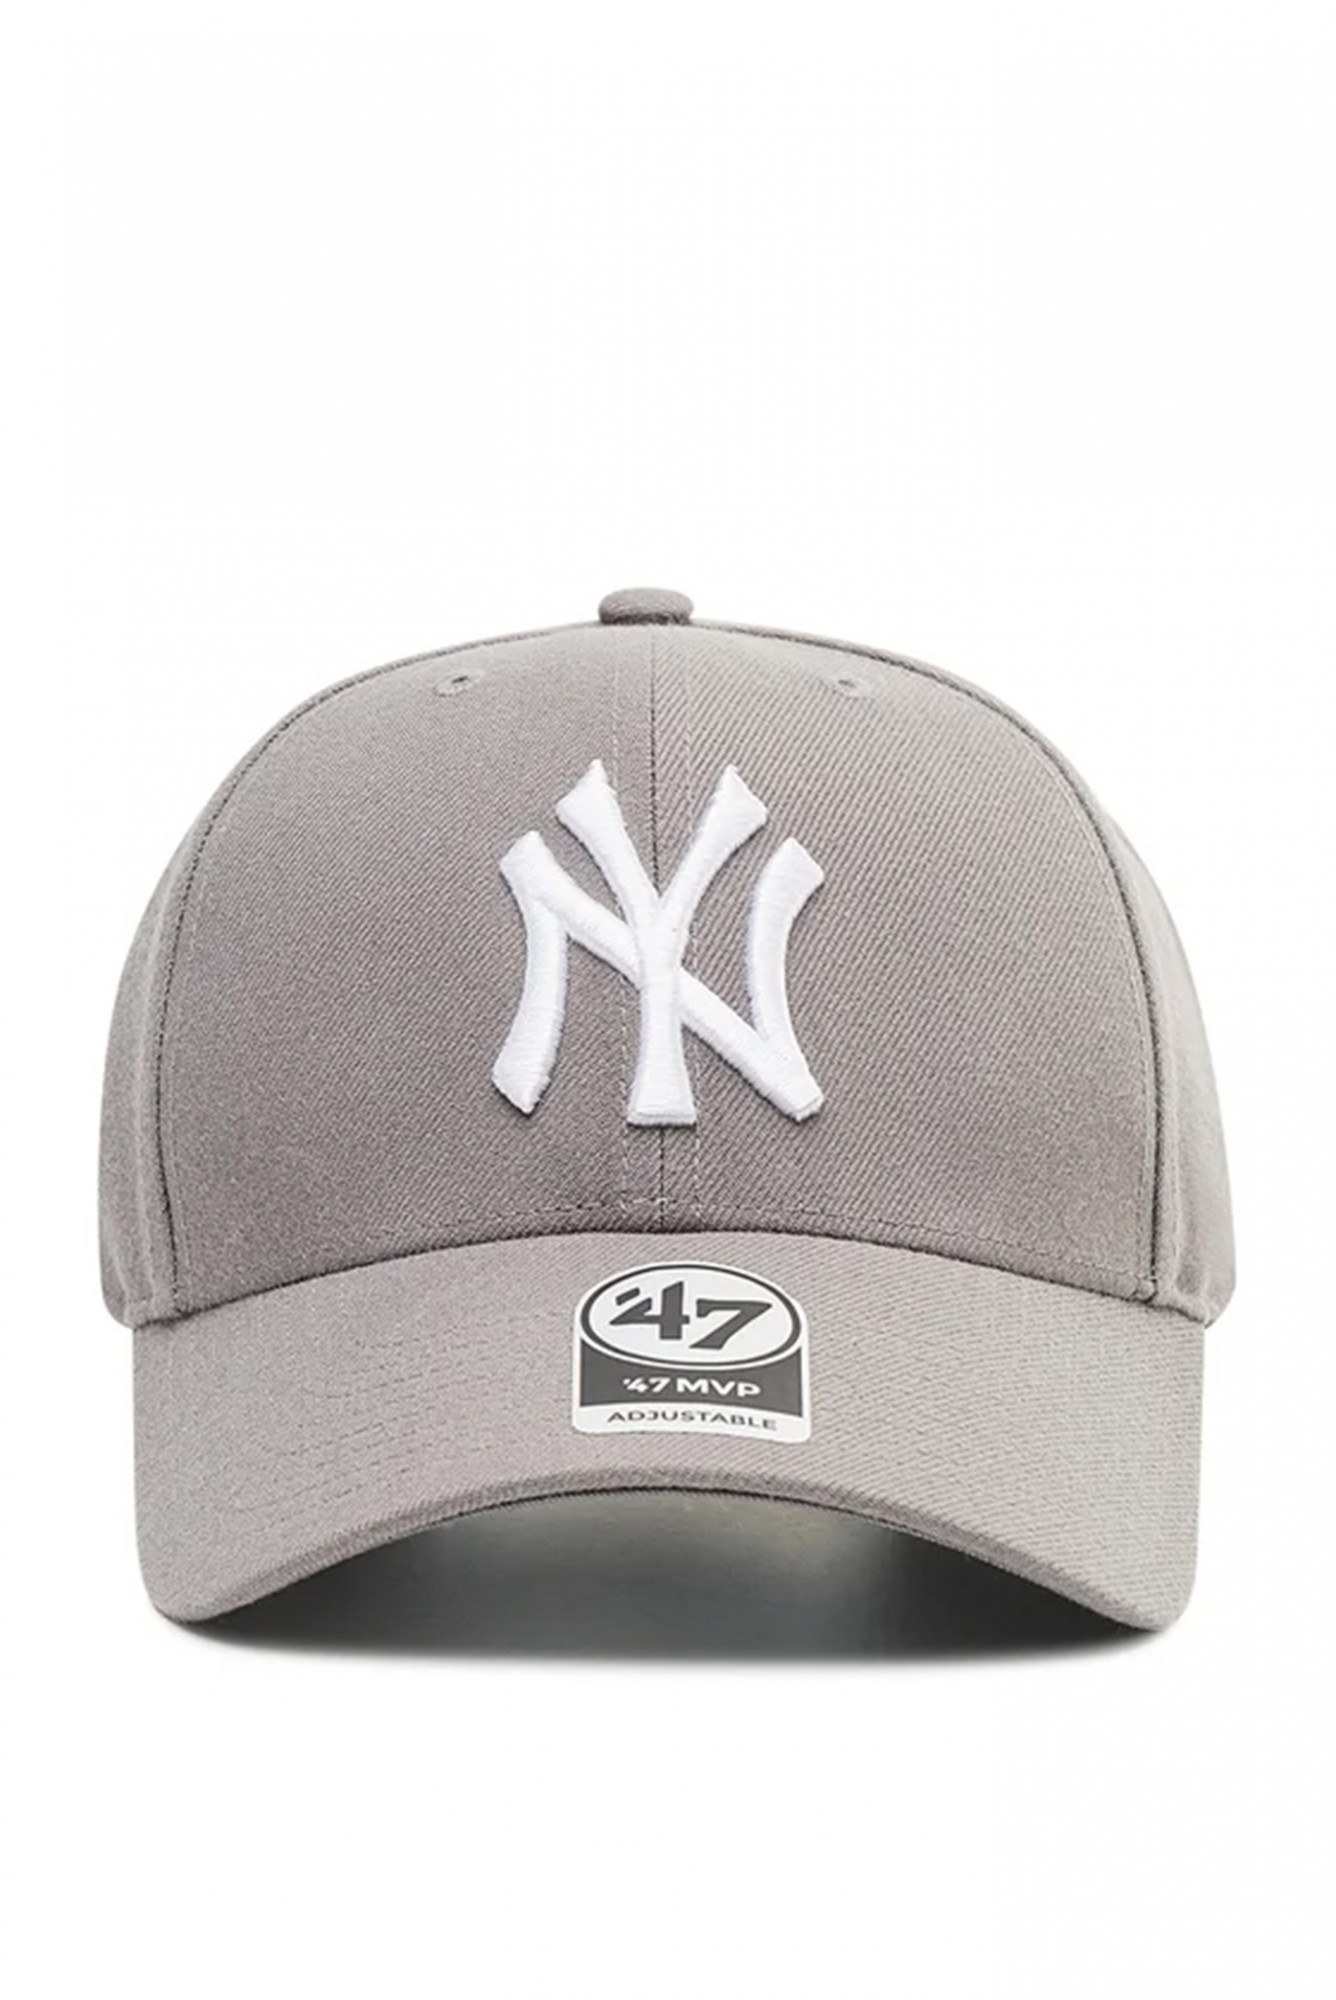 Бейсболка  47 Brand MLB NEW YORK YANKEES SNAPBACK серая B-MVPSP17WBP-DY изображение 2